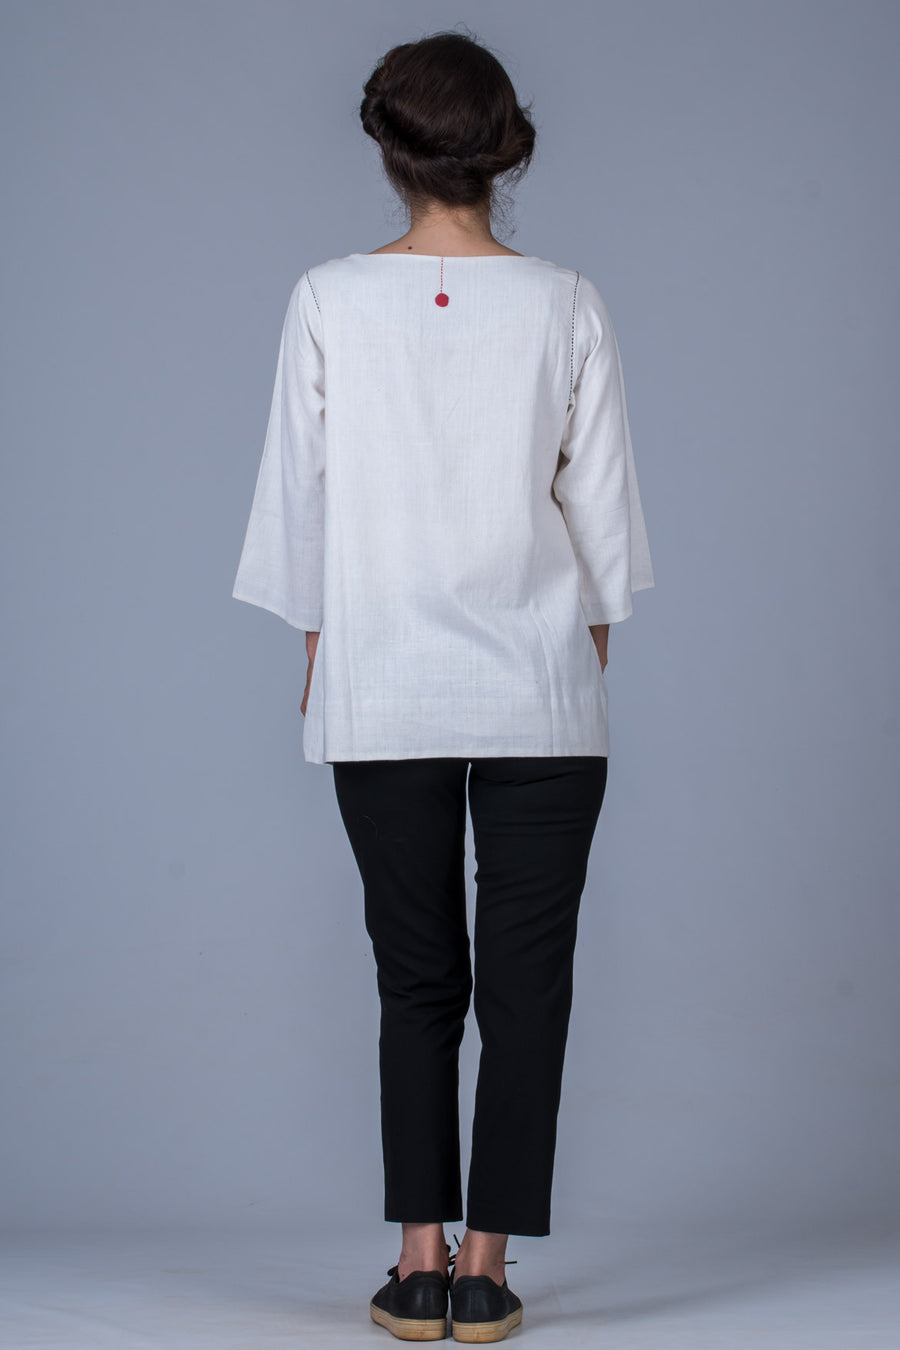 White Khadi Long Top - PARI - Upasana Design Studio